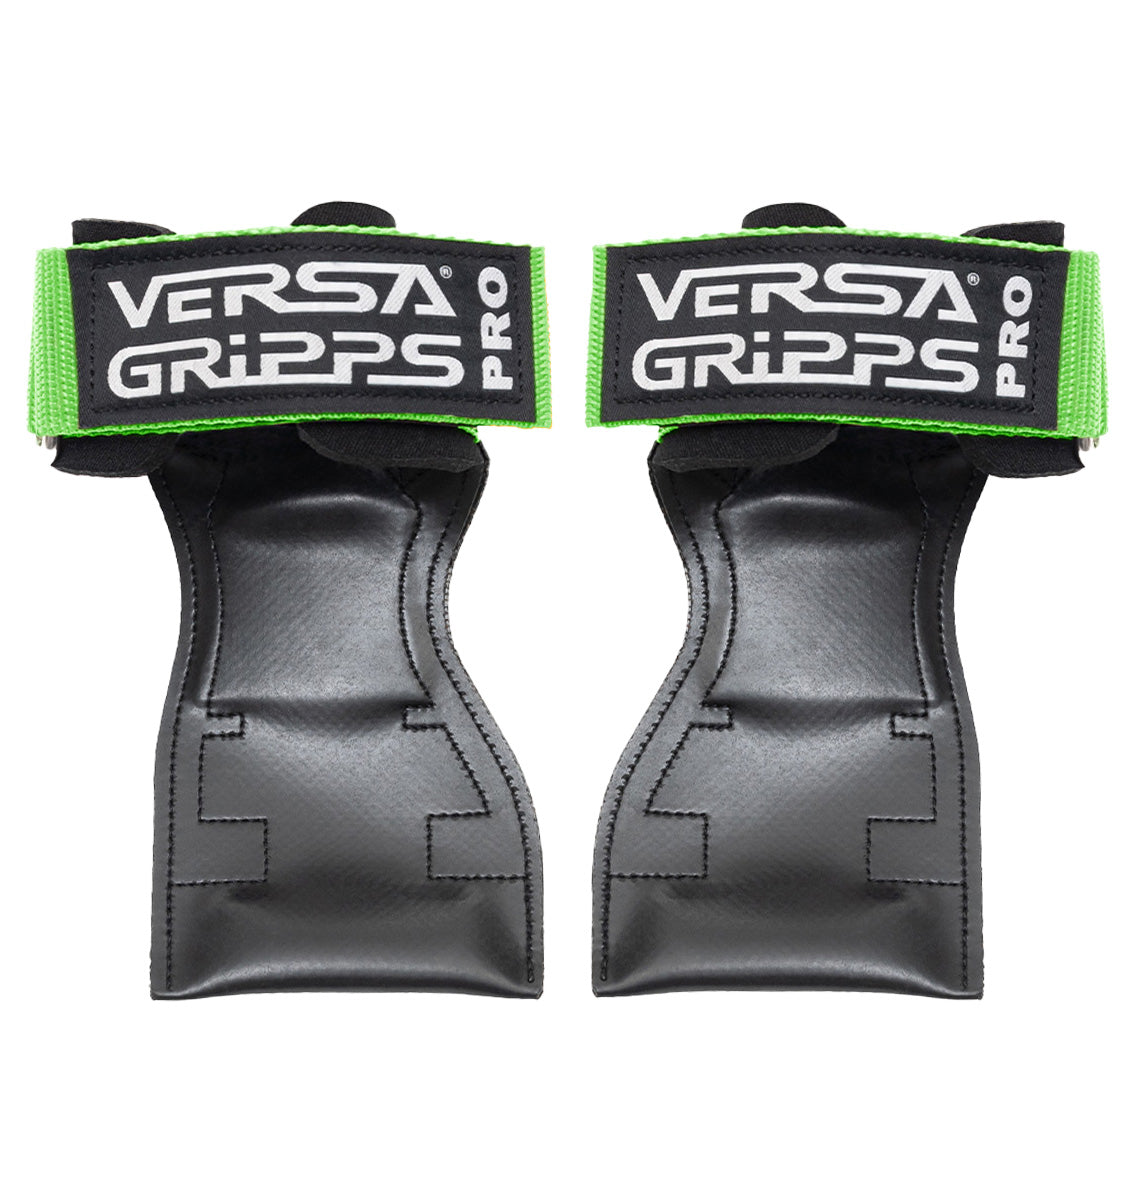 Versa Gripps® PRO Series Lifting Straps - Lime Green - 8